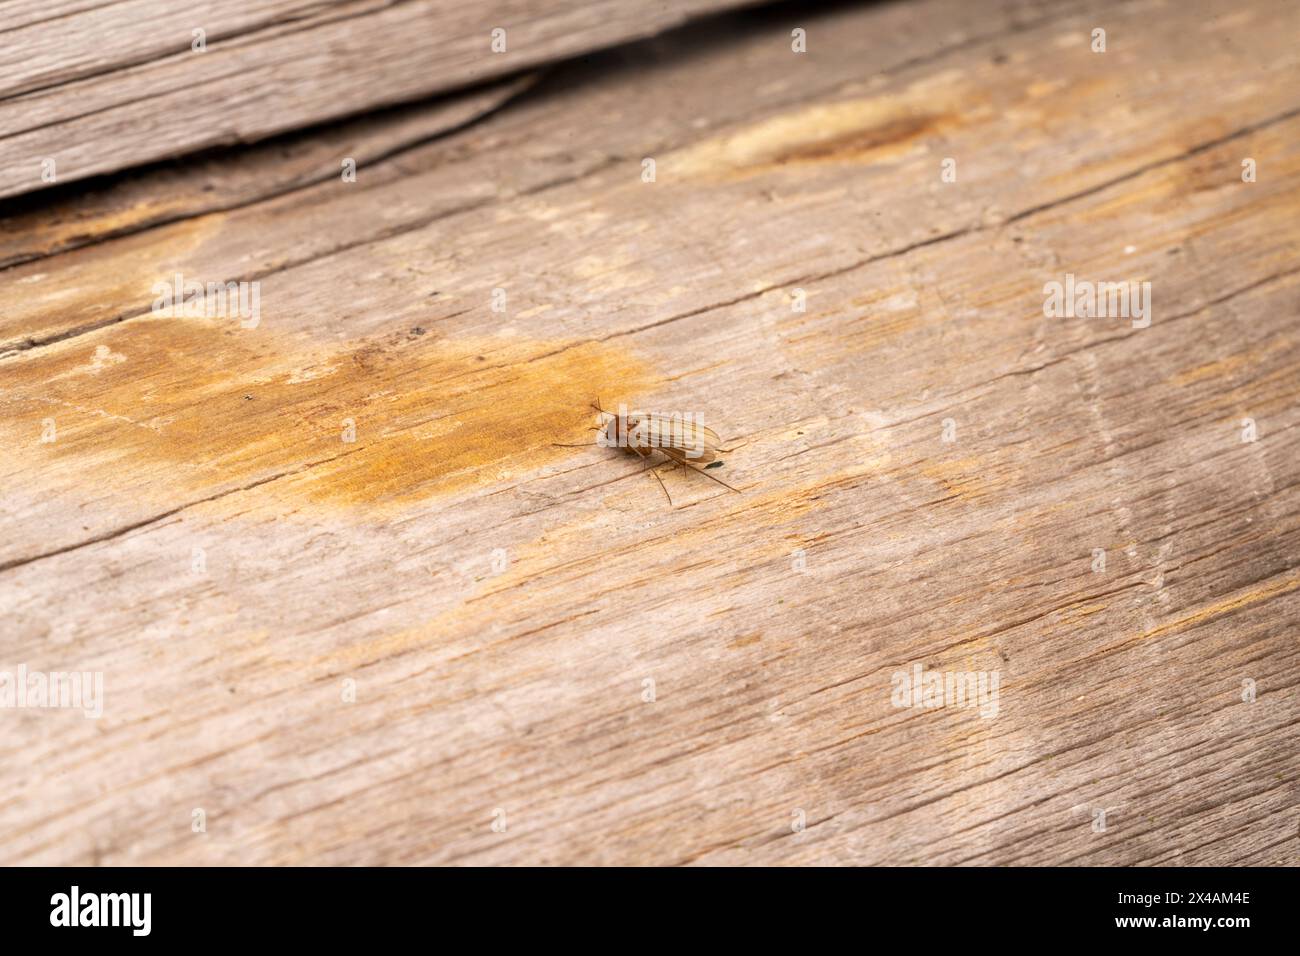 Gattung Mycetophila Familie Mycetophilidae Pilz Gnat wilde Natur Insektenbild, Tapete, Fotografie Stockfoto